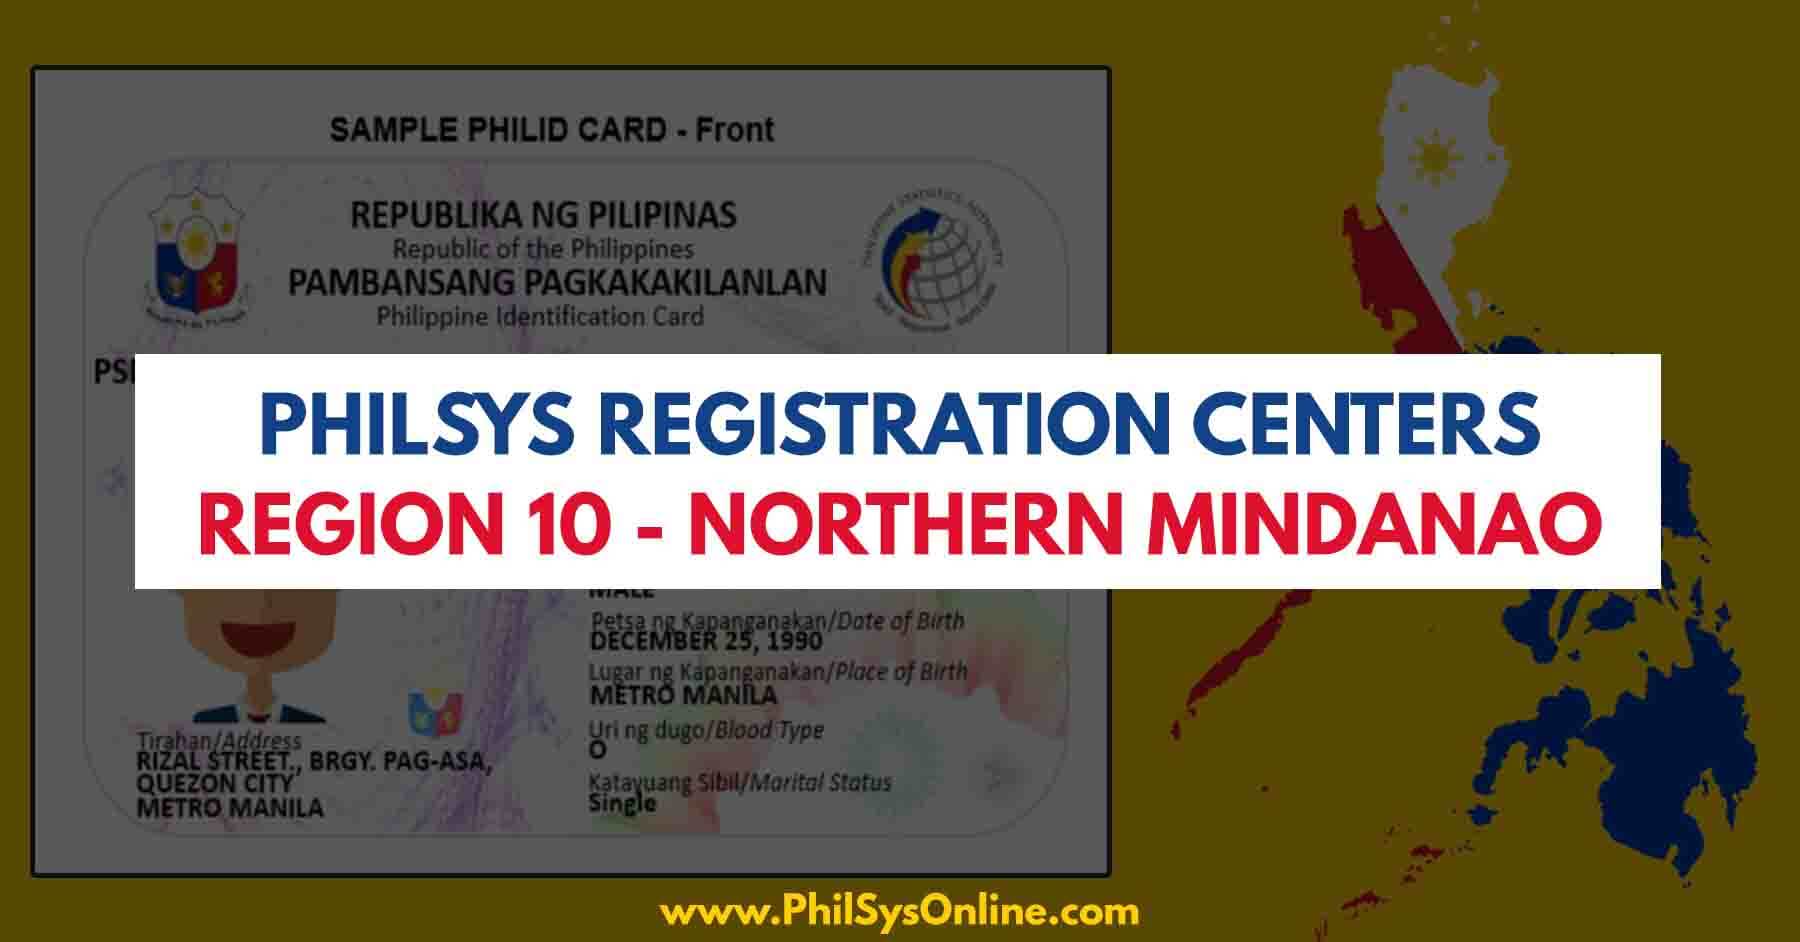 philsys registration centers region 10 Northern Mindanao philippines